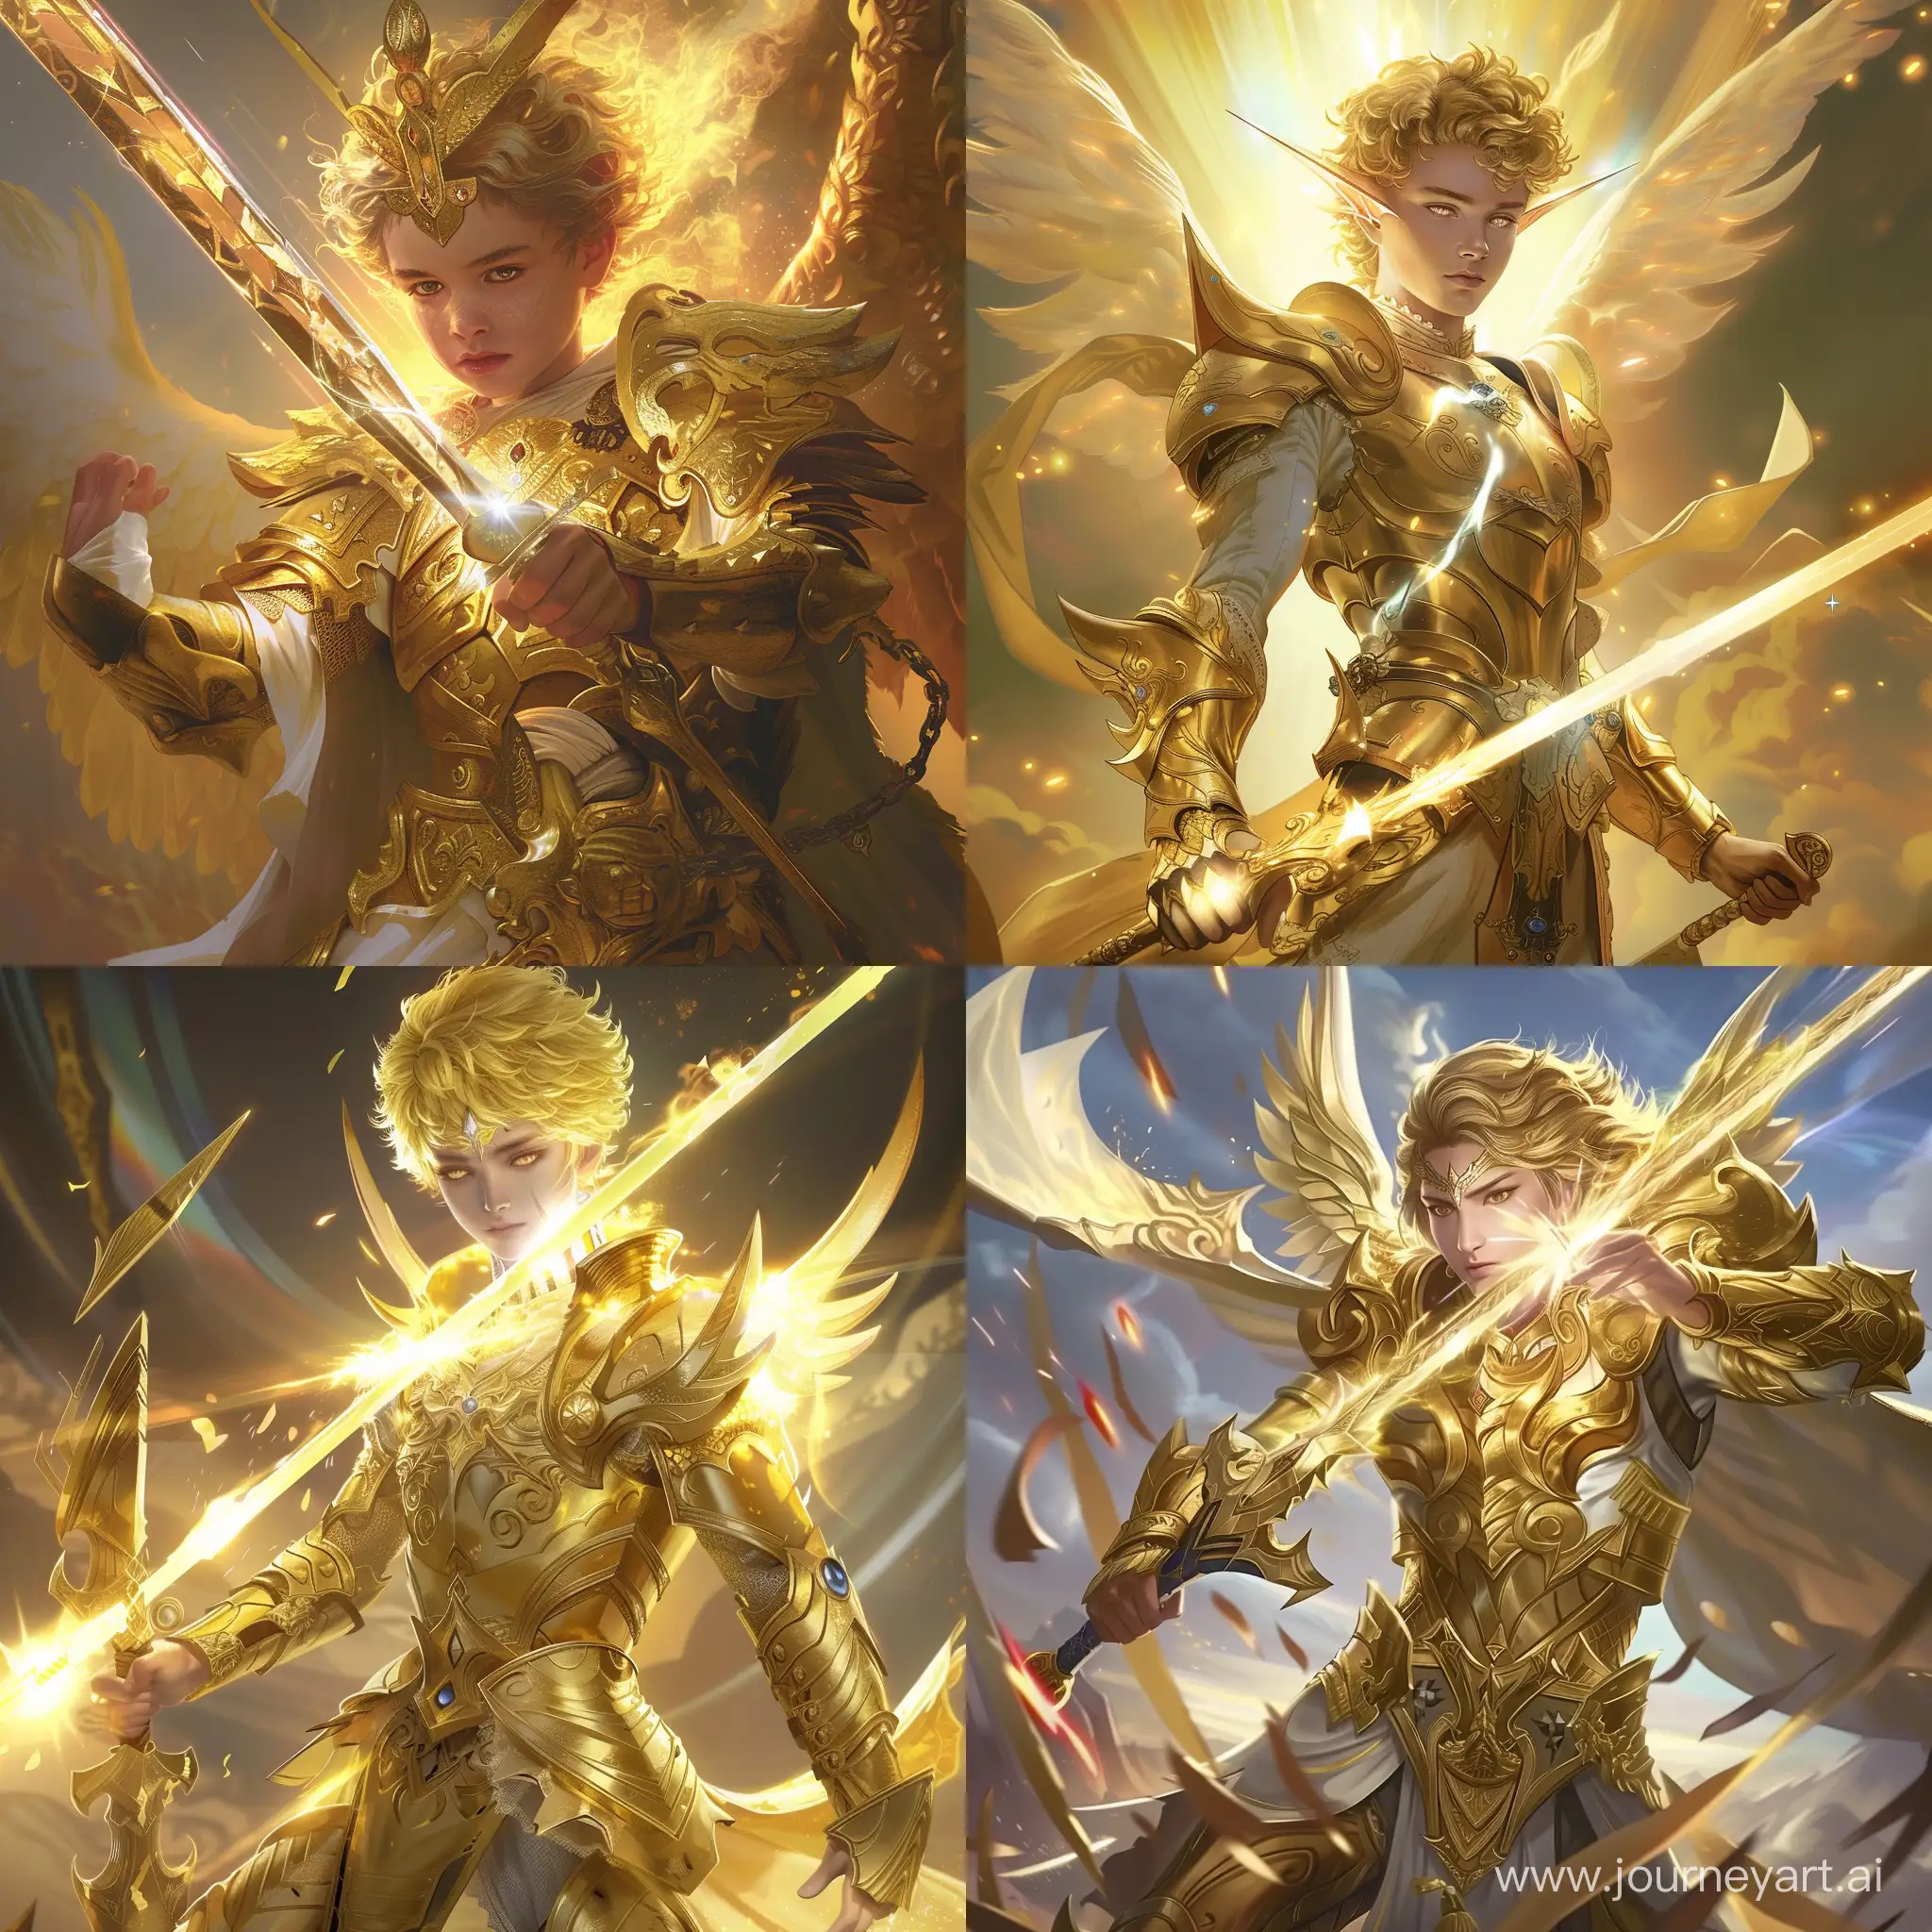 Goldenarmored-Young-God-of-Light-Wielding-Dazzling-Sword